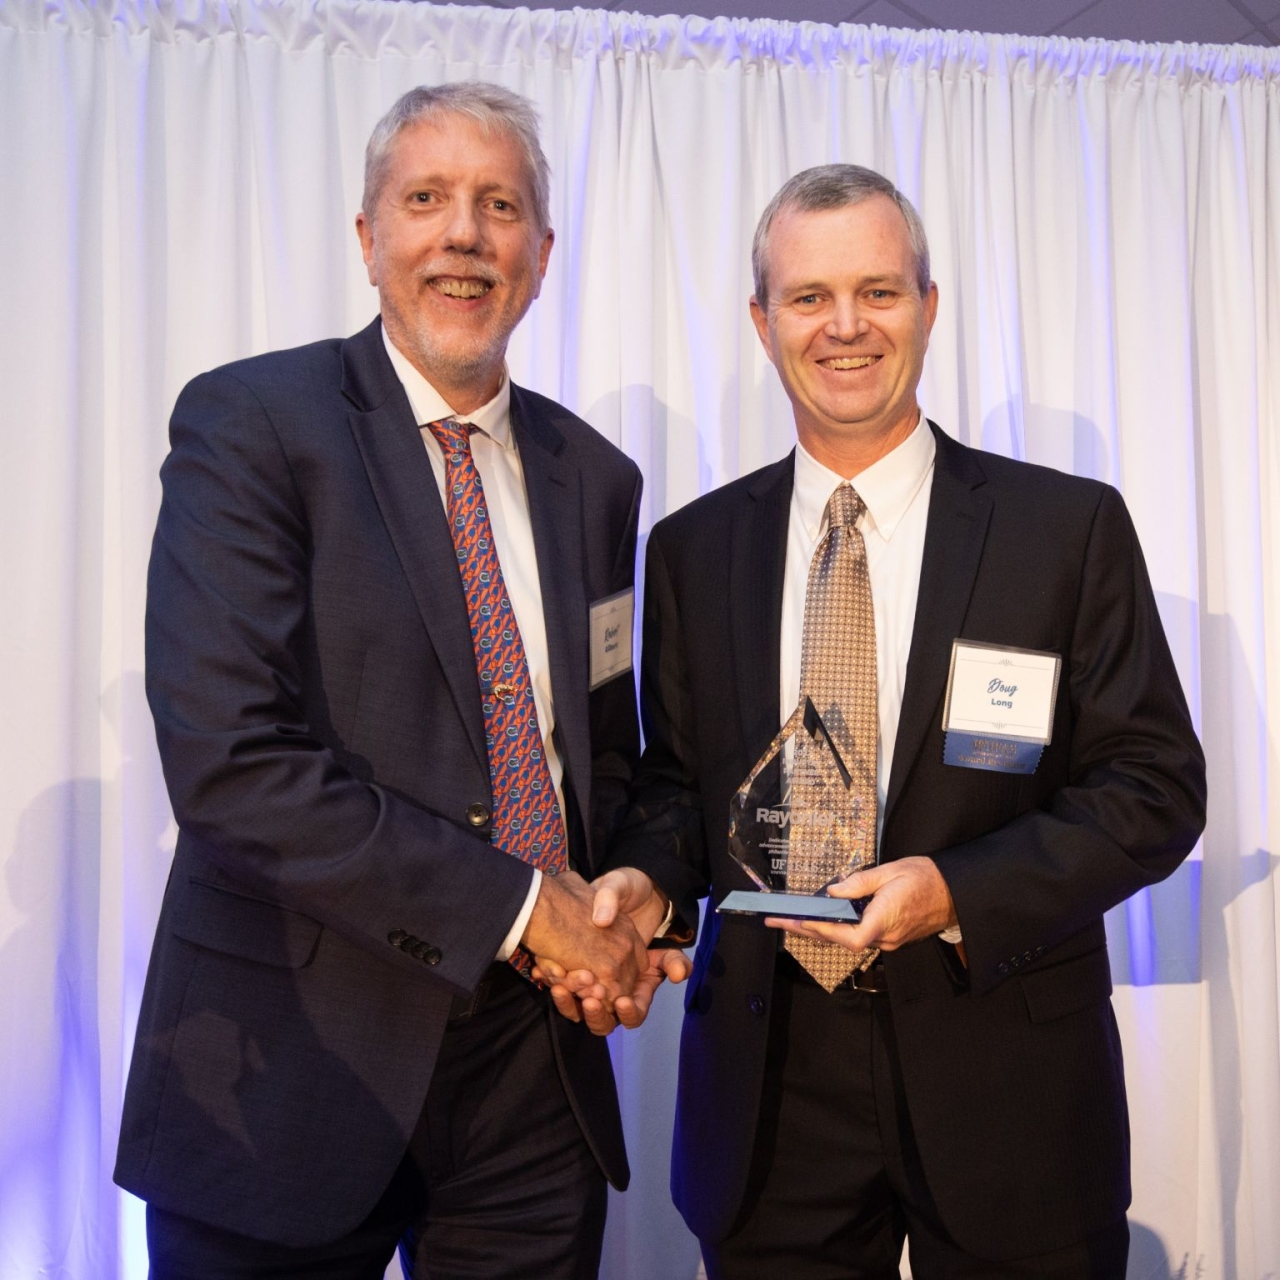 Senior Vice President Doug Long, a UF graduate, received the award on Rayonier's behalf.